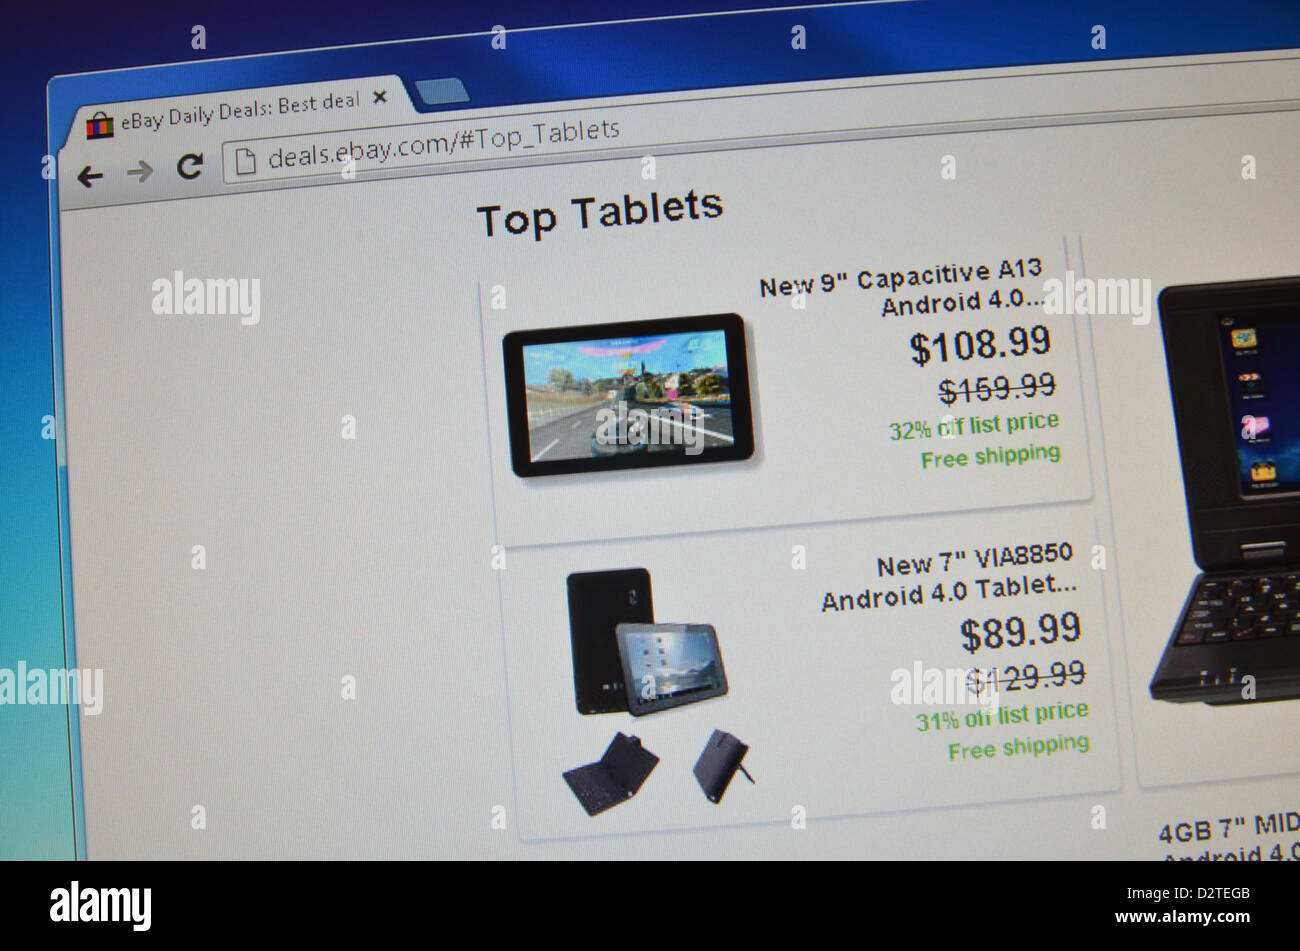 Ebay Daily deals page website screenshot Stock Photo